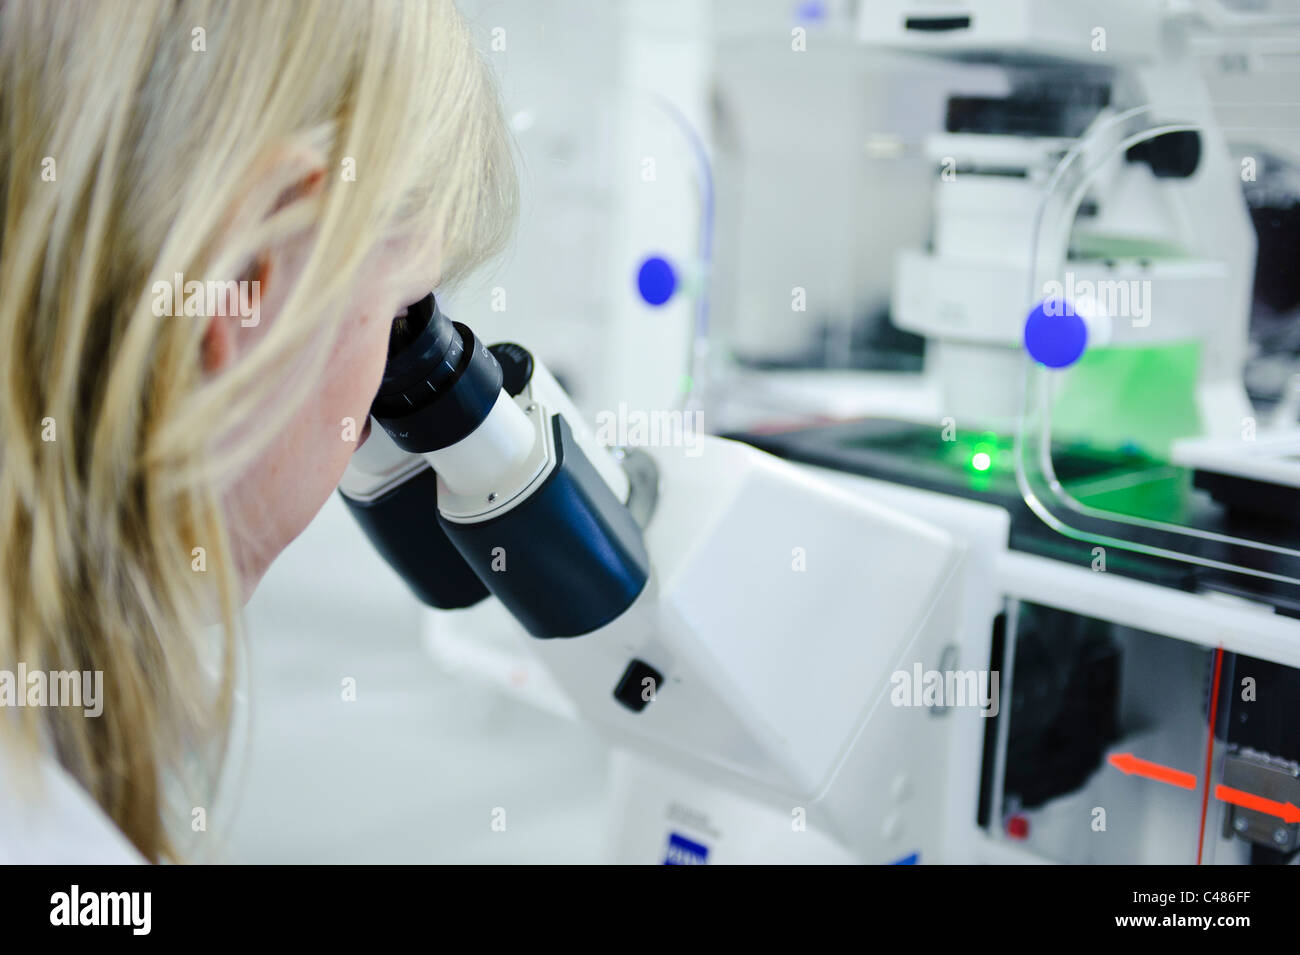 Junge blonde Wissenschaftlerin weißen Lab Coat starken Mikroskop in gut beleuchteten Wissenschaft Labor Zelle Bildern am Computer-Bildschirm Stockfoto